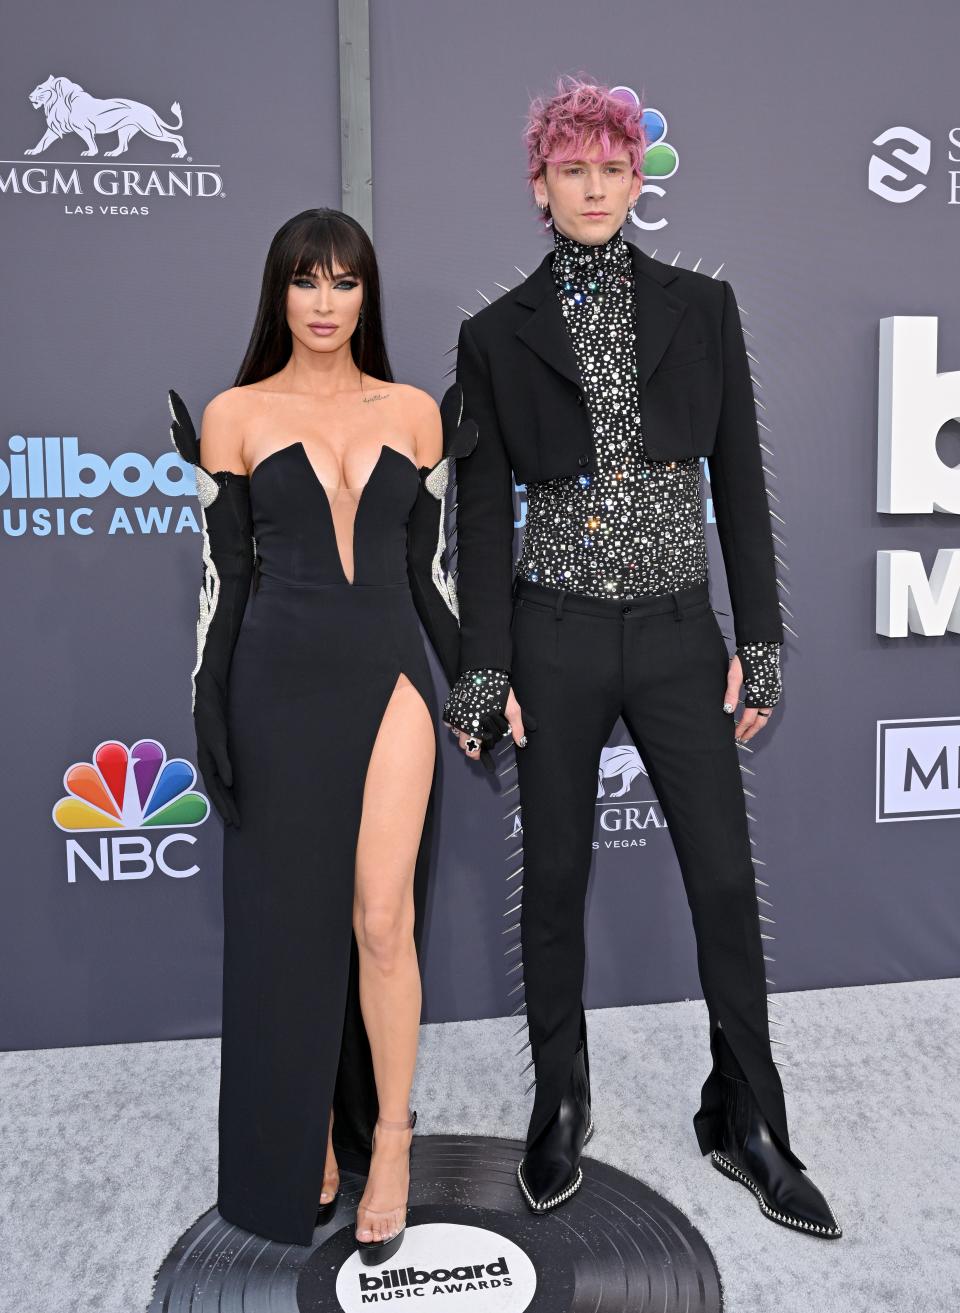 Megan Fox and Machine Gun Kelly attend the 2022 Billboard Music Awards on May 15, 2022 in Las Vegas, Nevada.